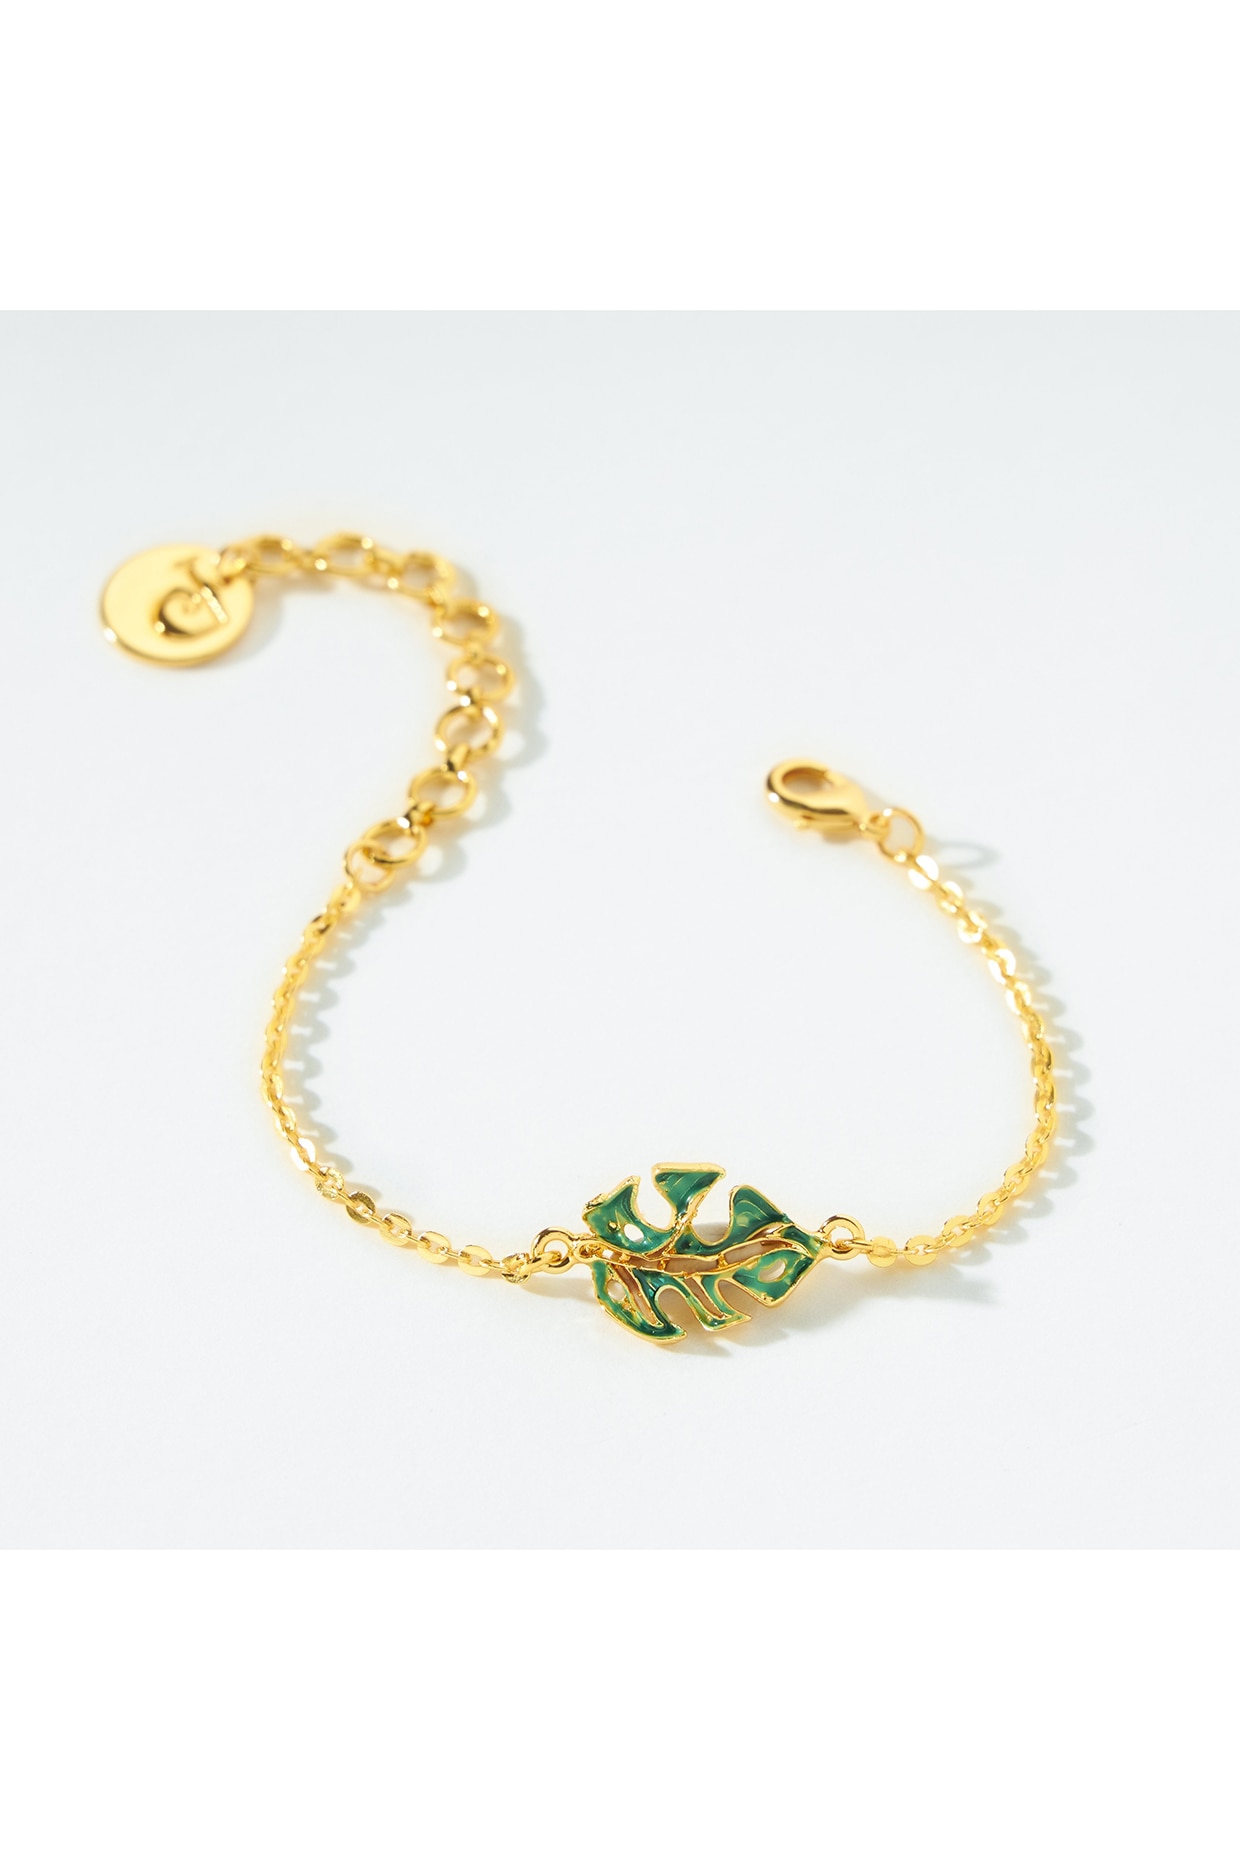 Gold Finish Enameled Bracelet Design by Prerto at Pernia's Pop Up Shop 2024